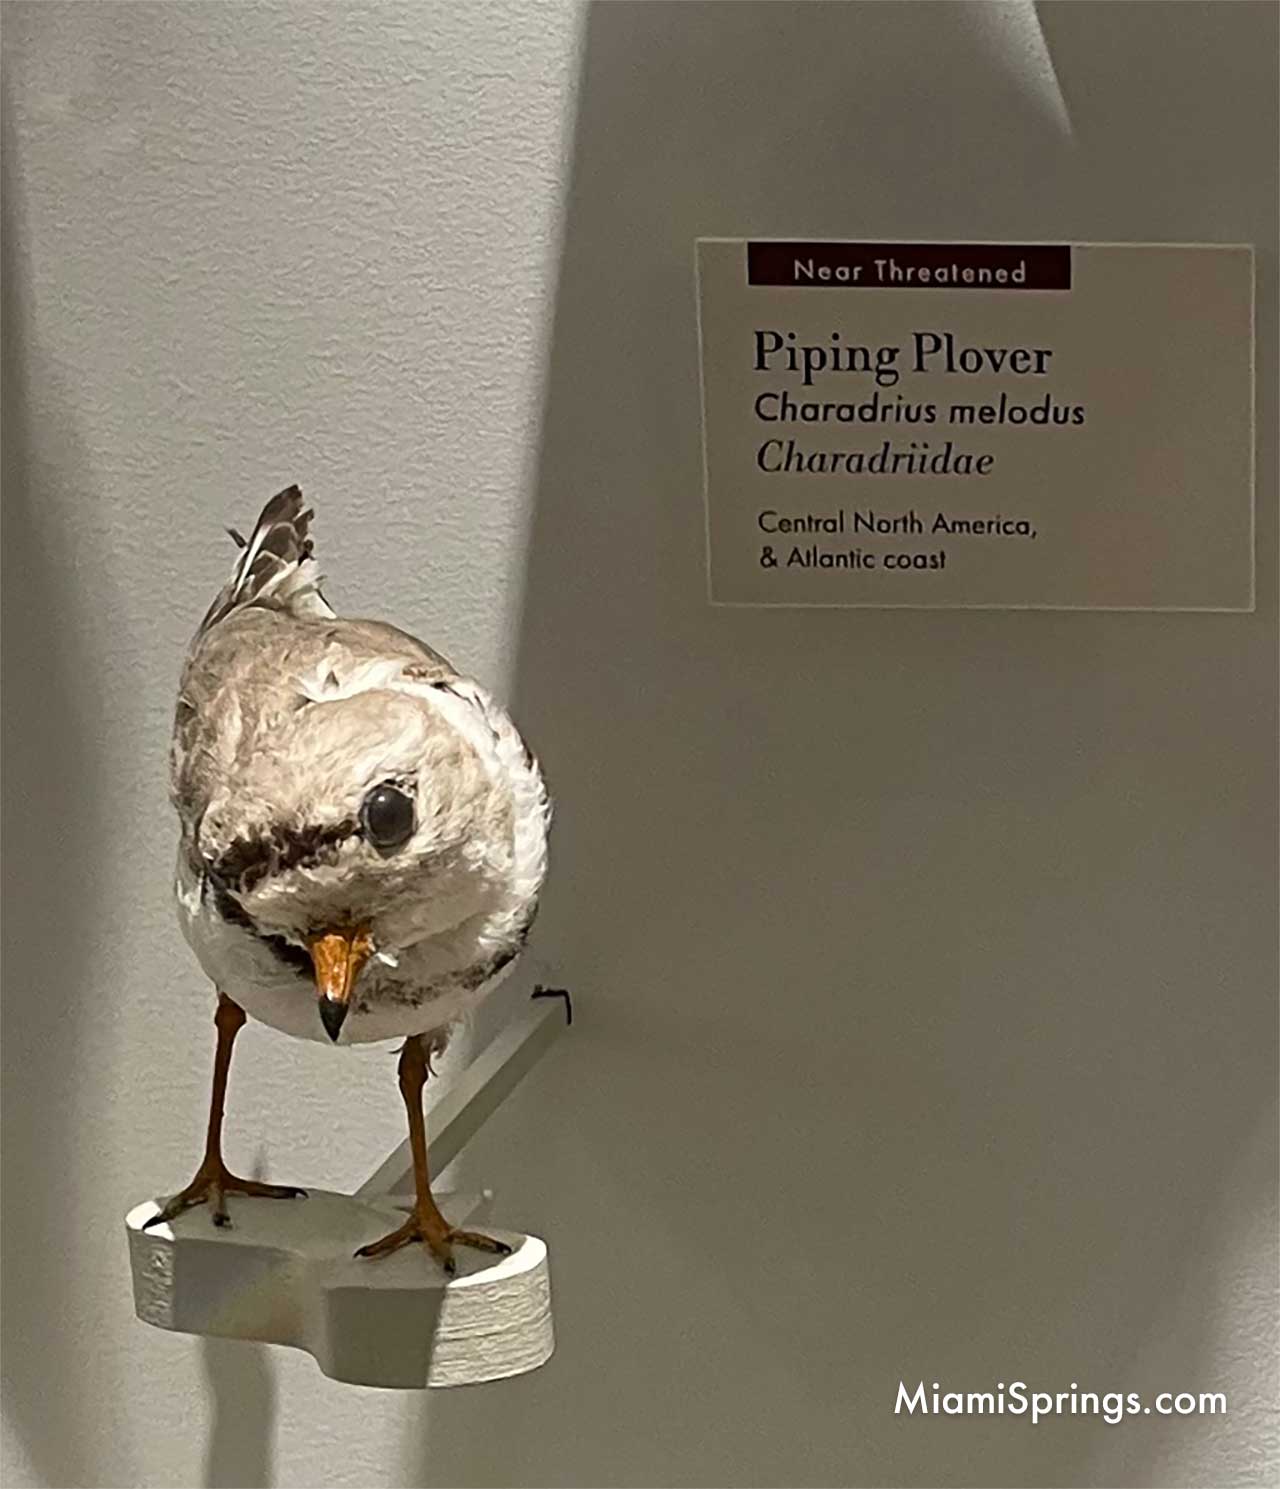 Piping Plover displayed at the Harvard Museum of Natural History